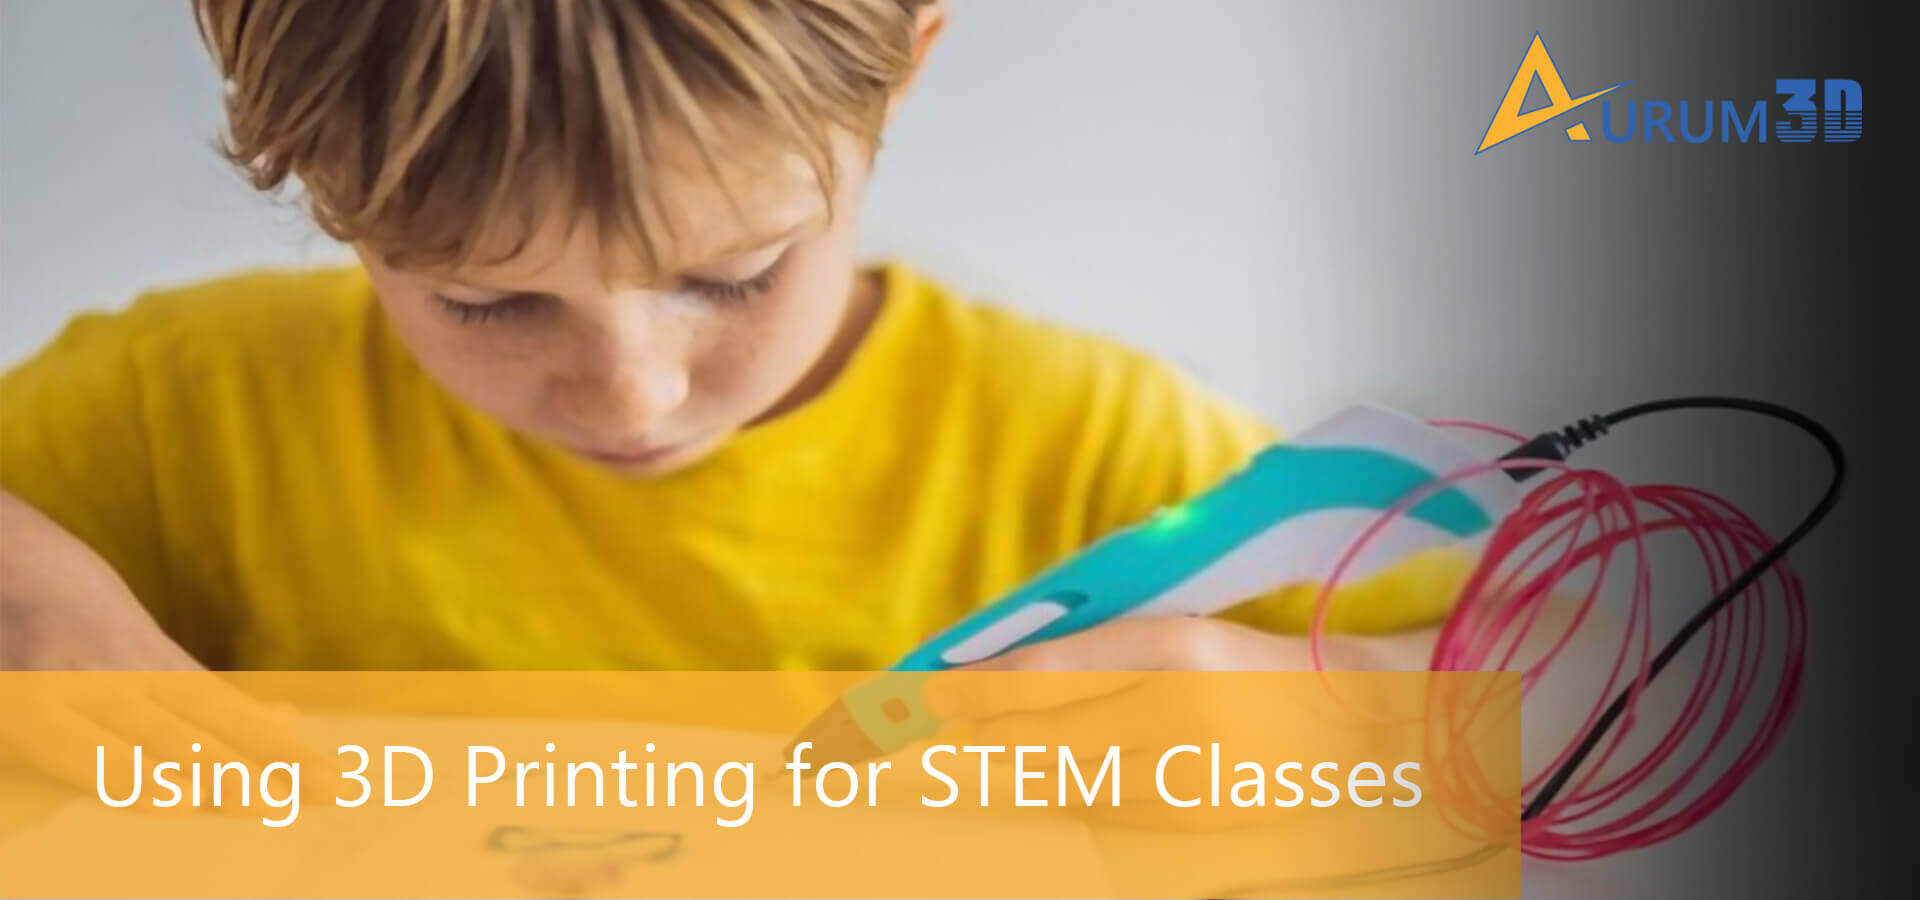 Using 3D Printing for STEM Classes